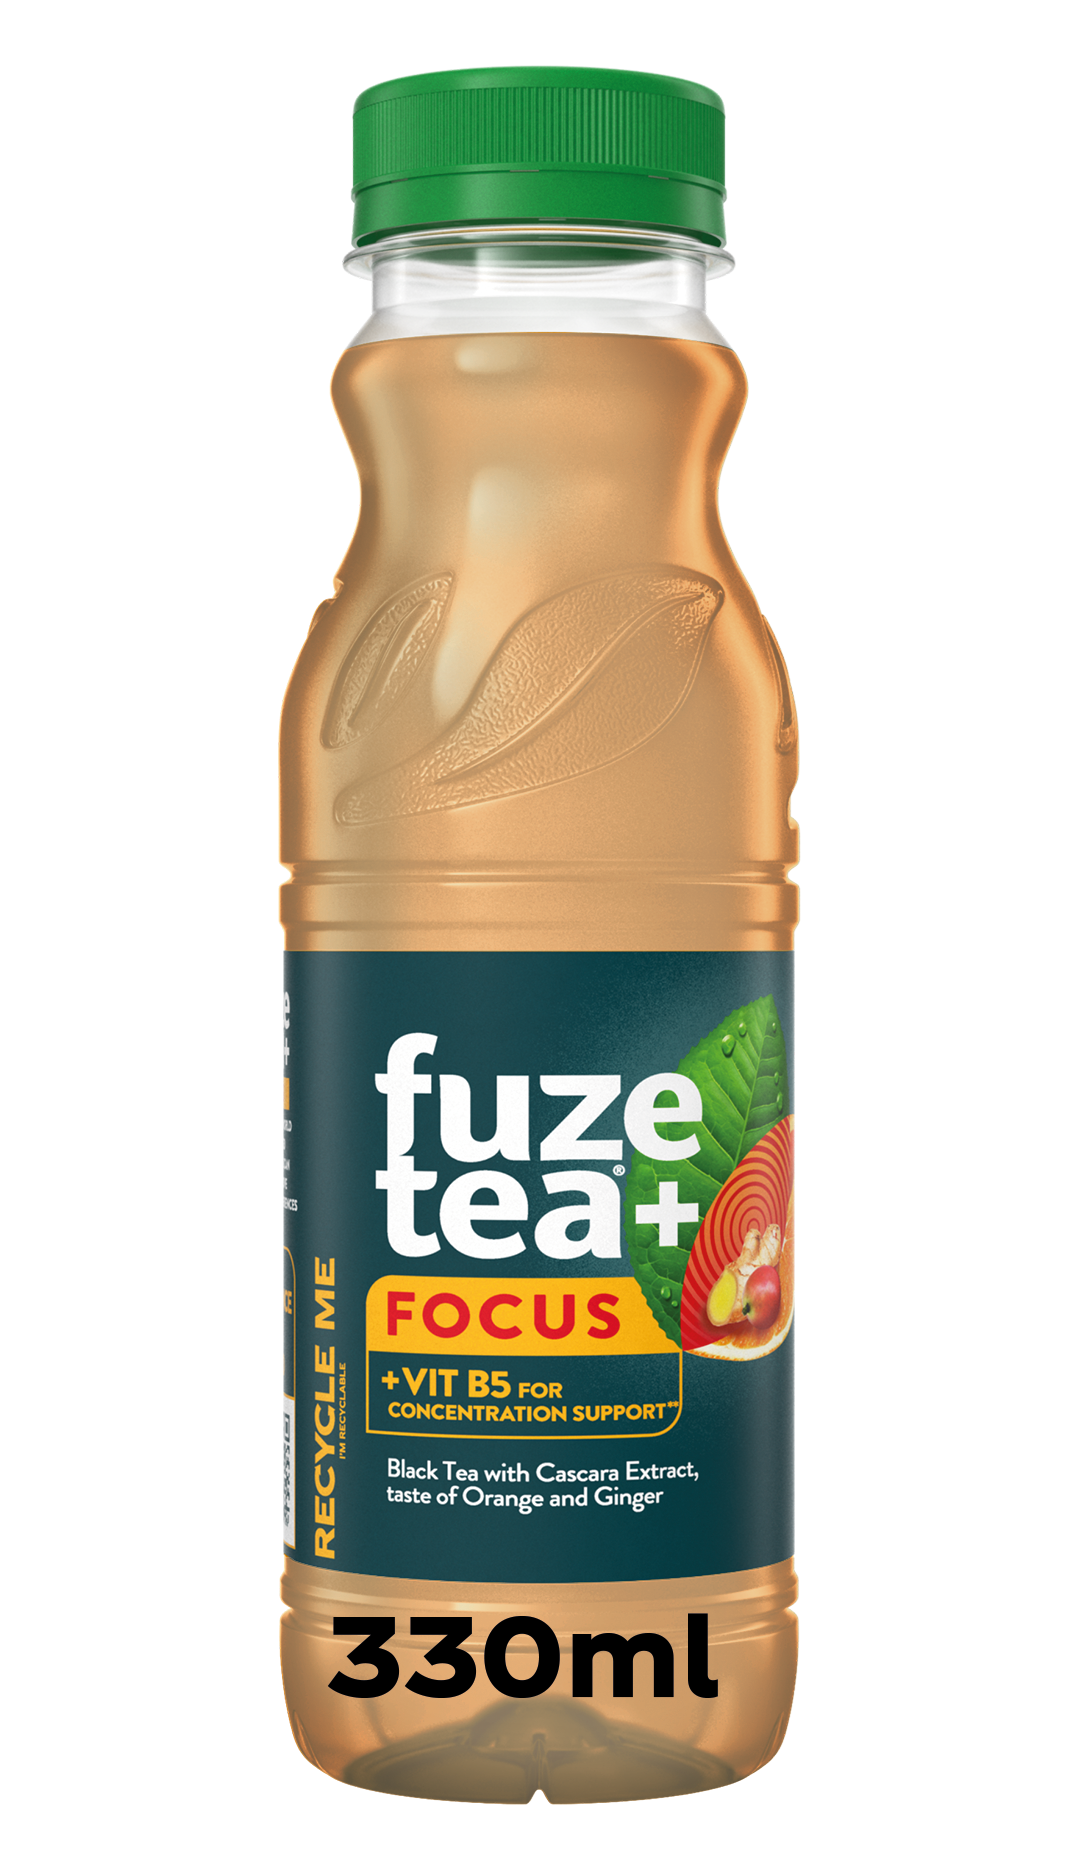 Fuze Tea+ Focus